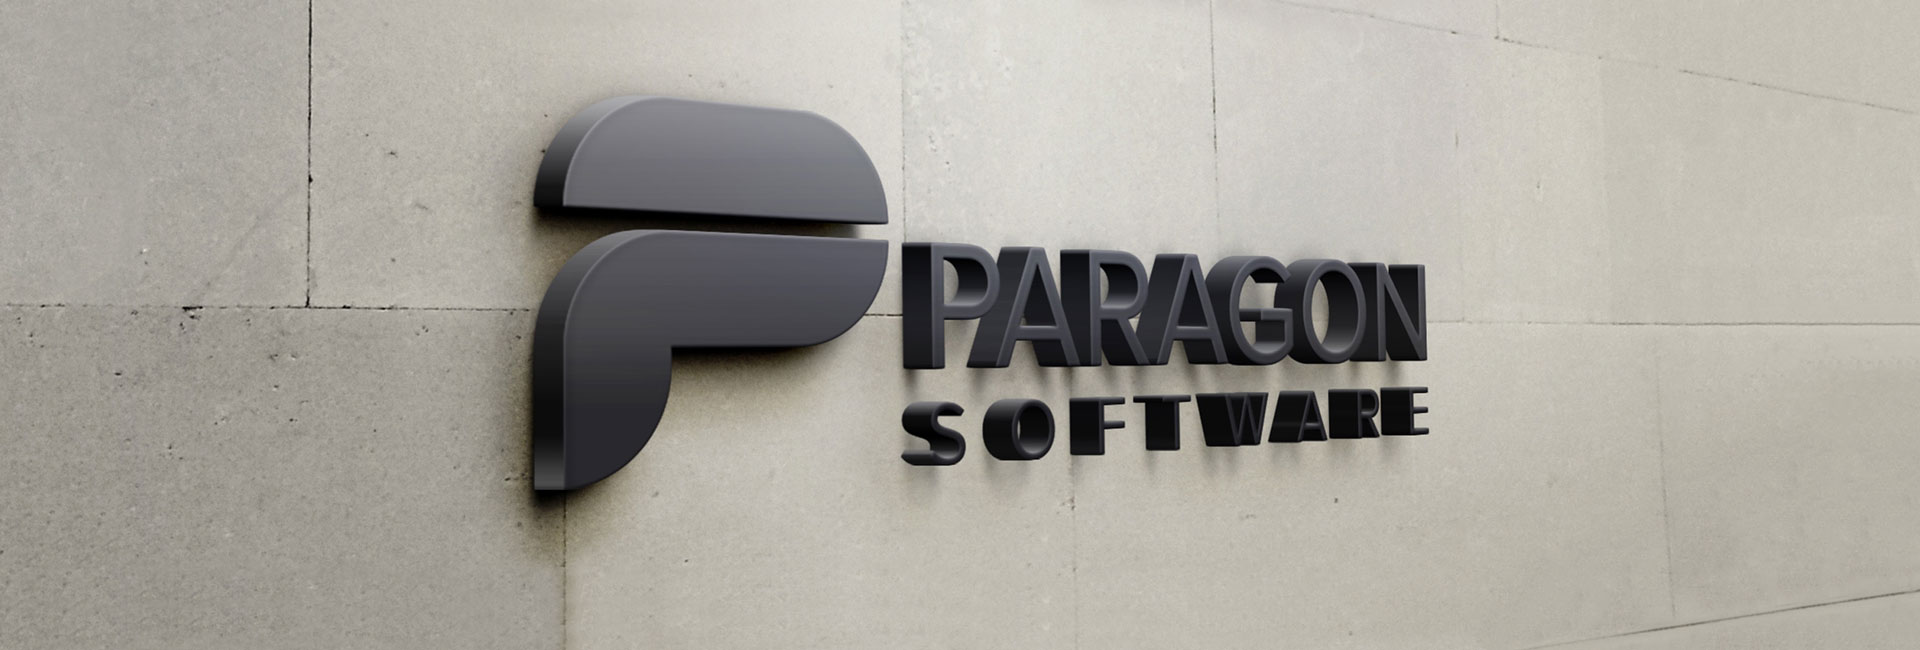 paragon software for mac